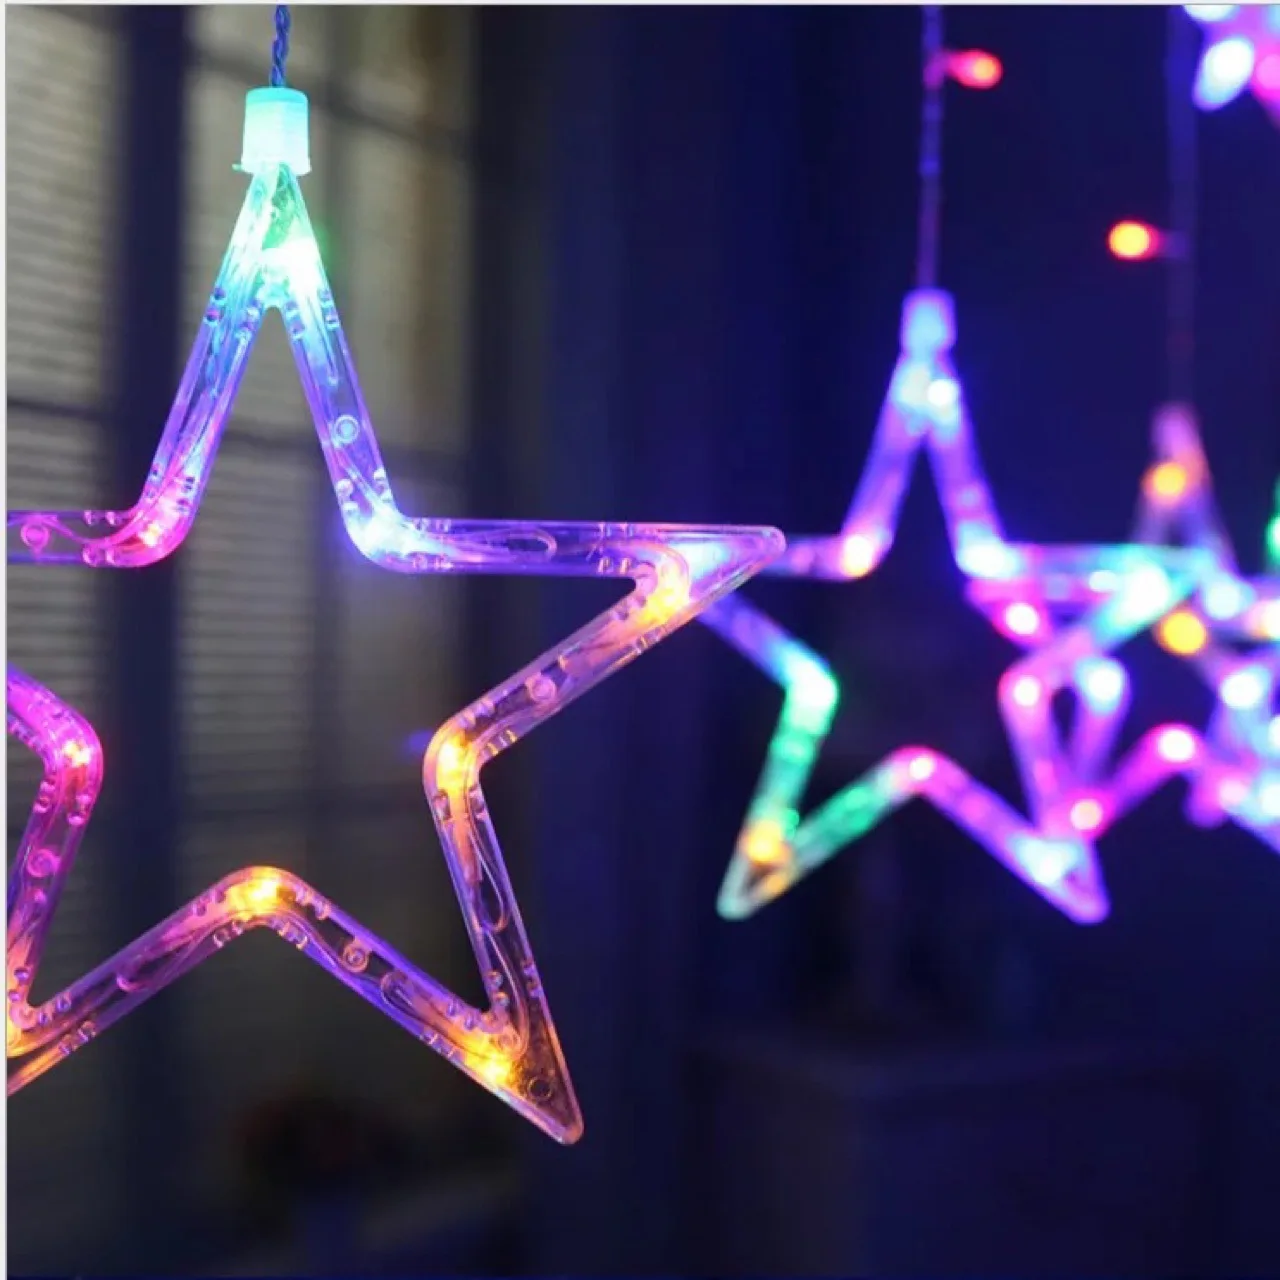 220v /110v stjernede LED Curtain String Lys Fe Krans Til det nye år 2021 julepynt juledekoration til hjemmet